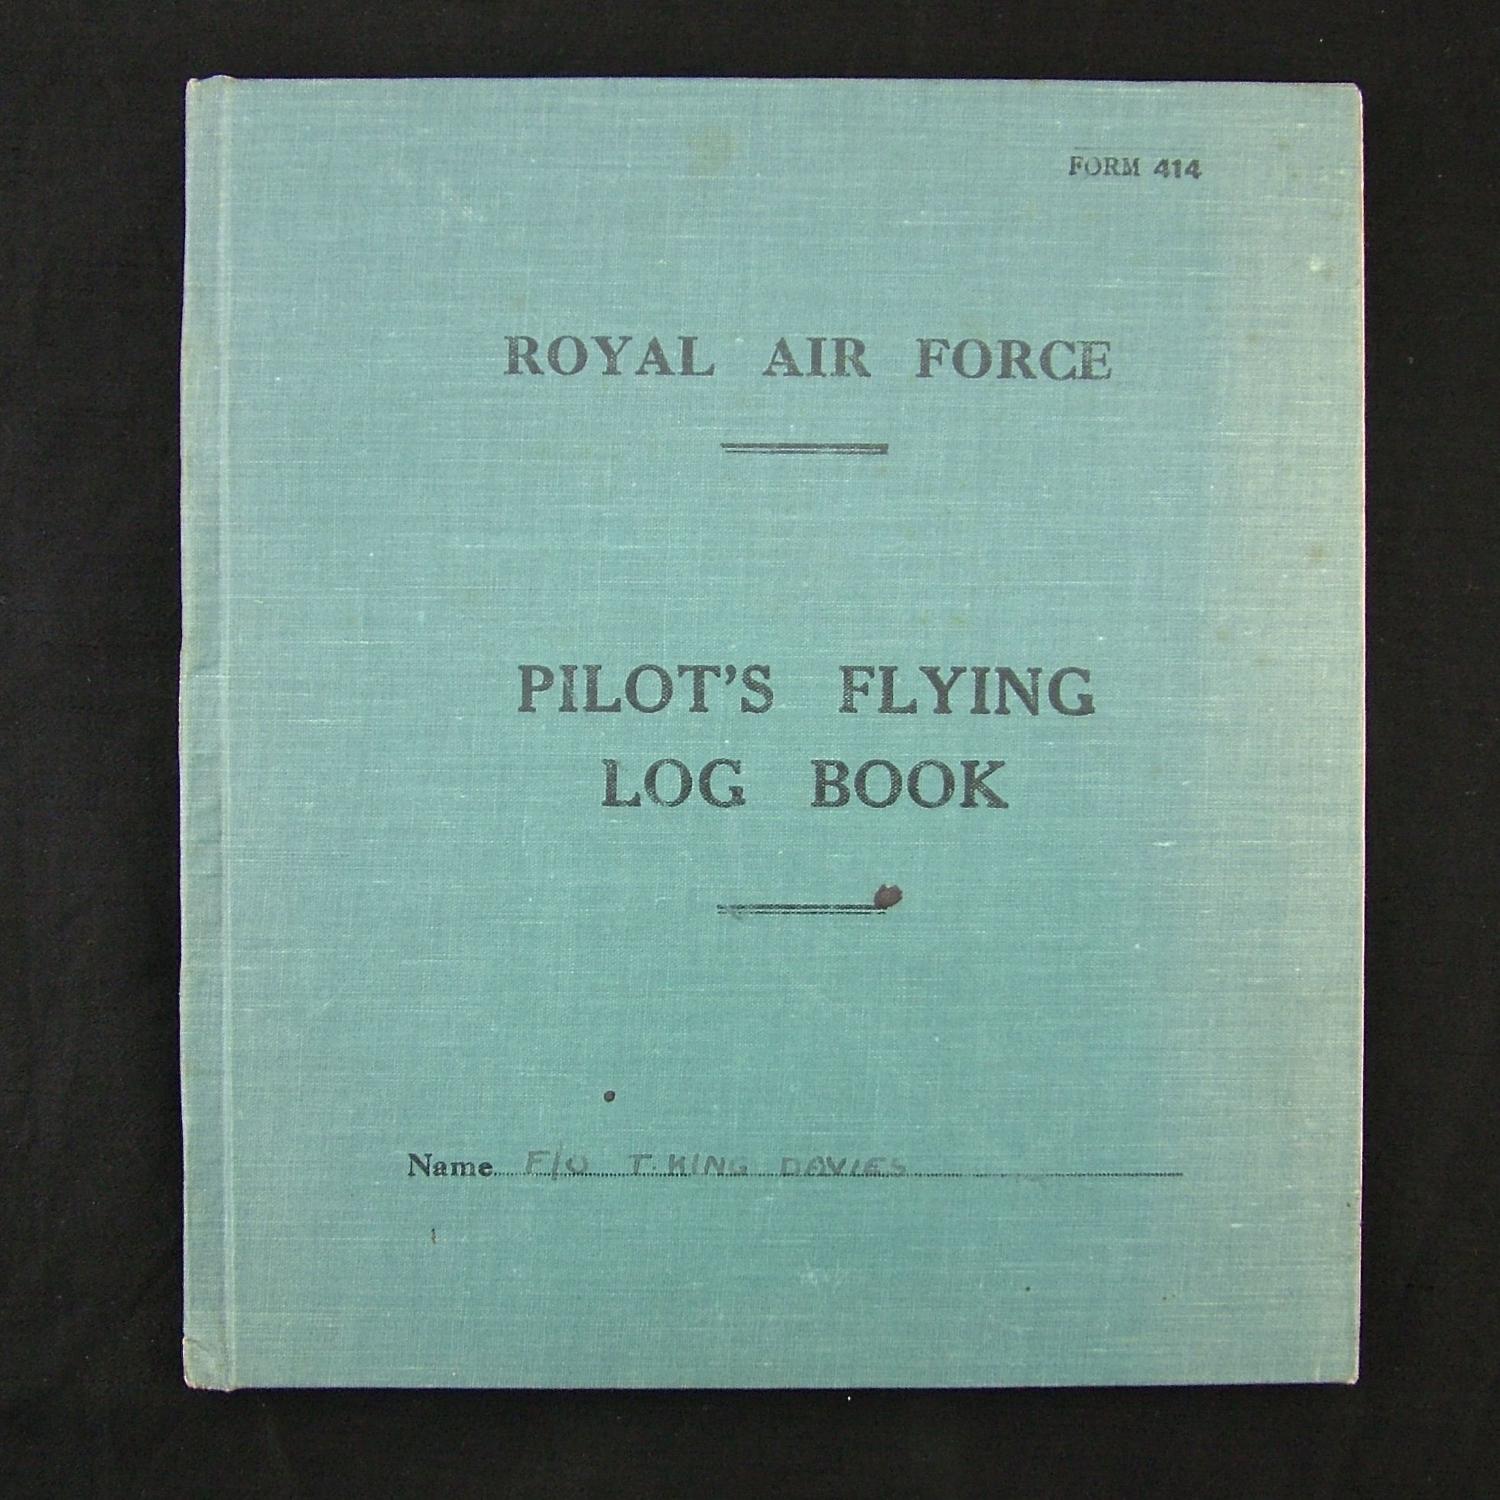 RAF pilot's flying log book